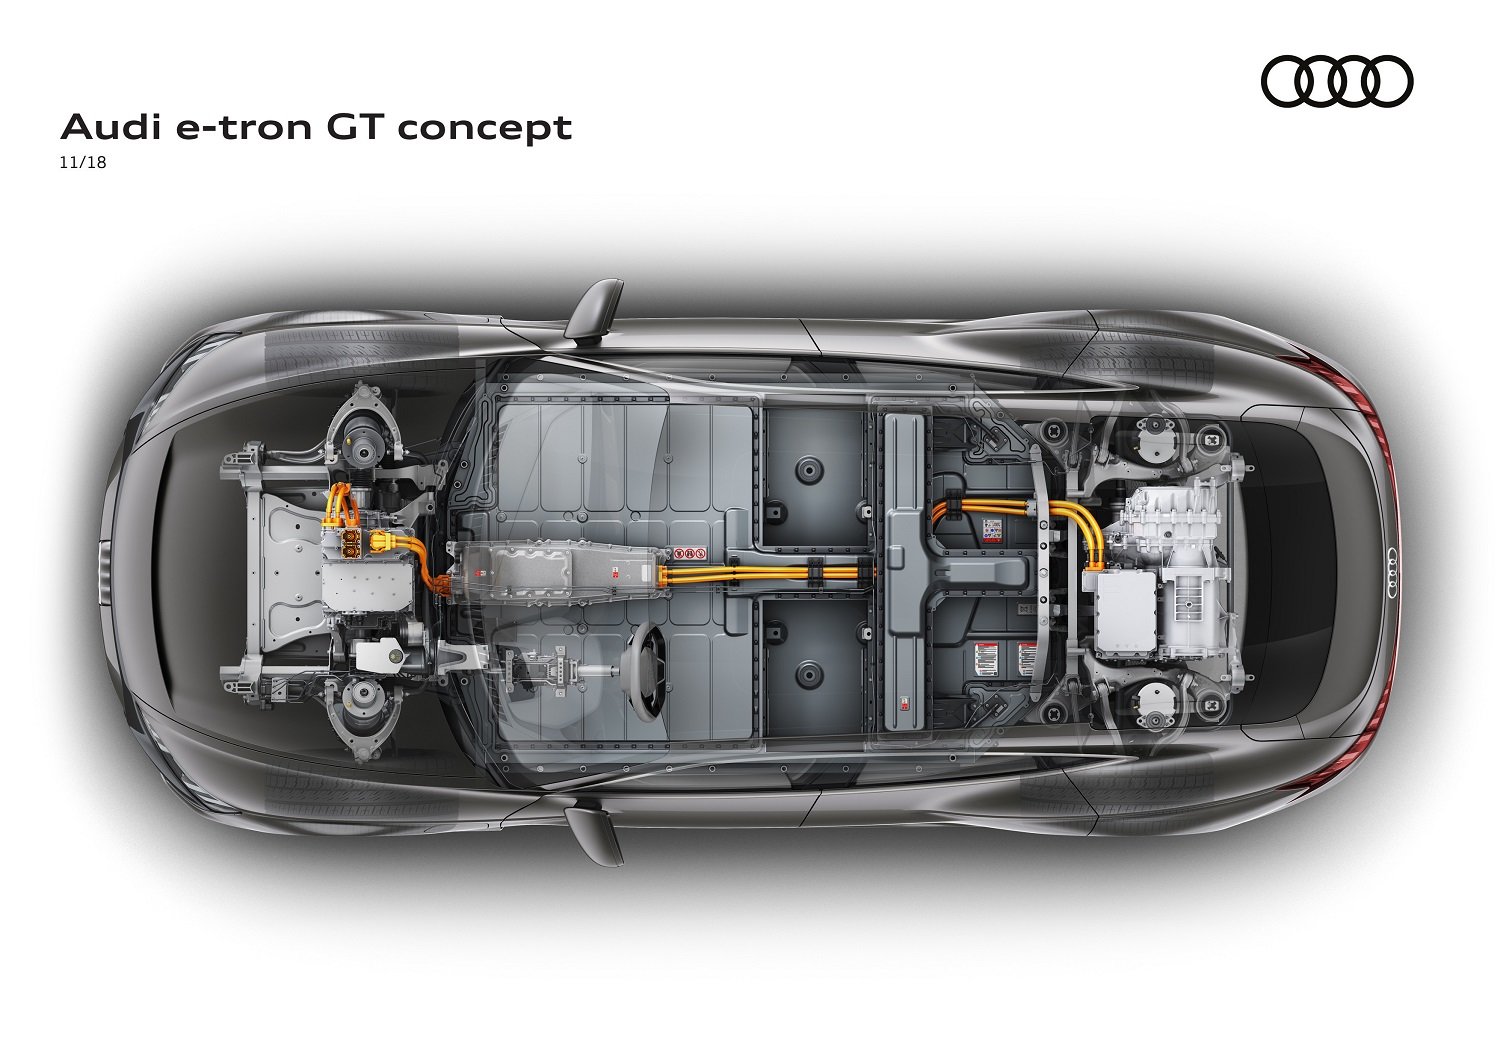 Fotografie C 24 U Clanku Audi Predstavuje Koncept E Tron Gt 590 Koni Extremne Rychle Nabijeni A Vegansky Interier Autoroad Cz